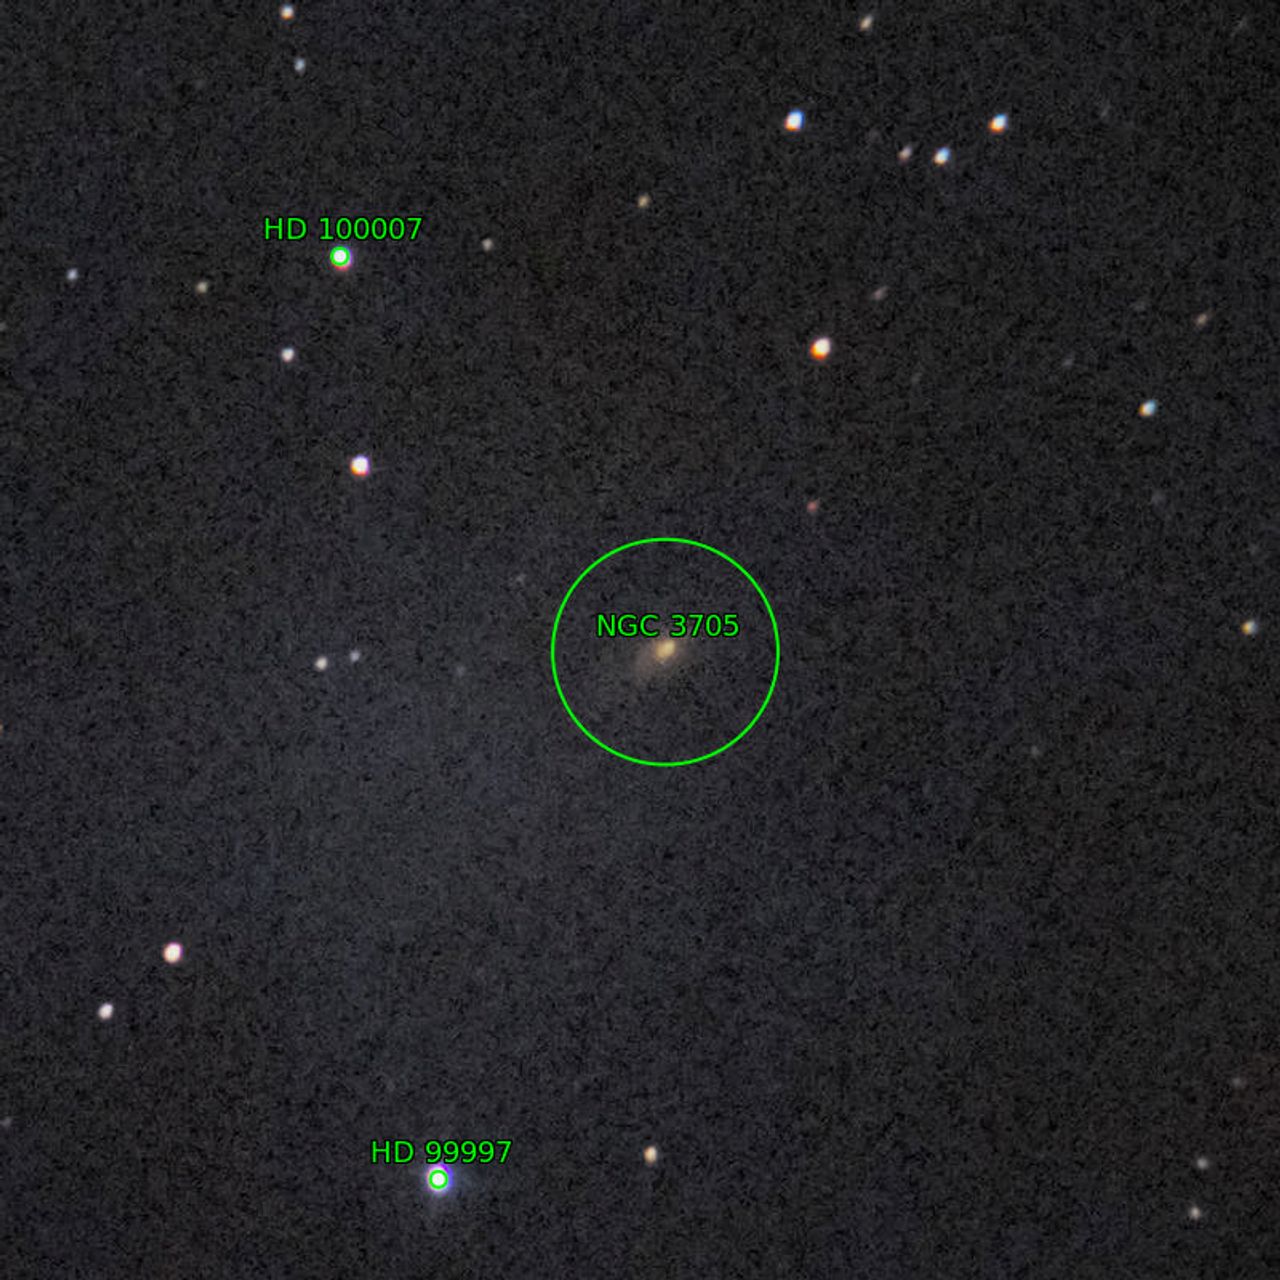 Annotation around NGC3705